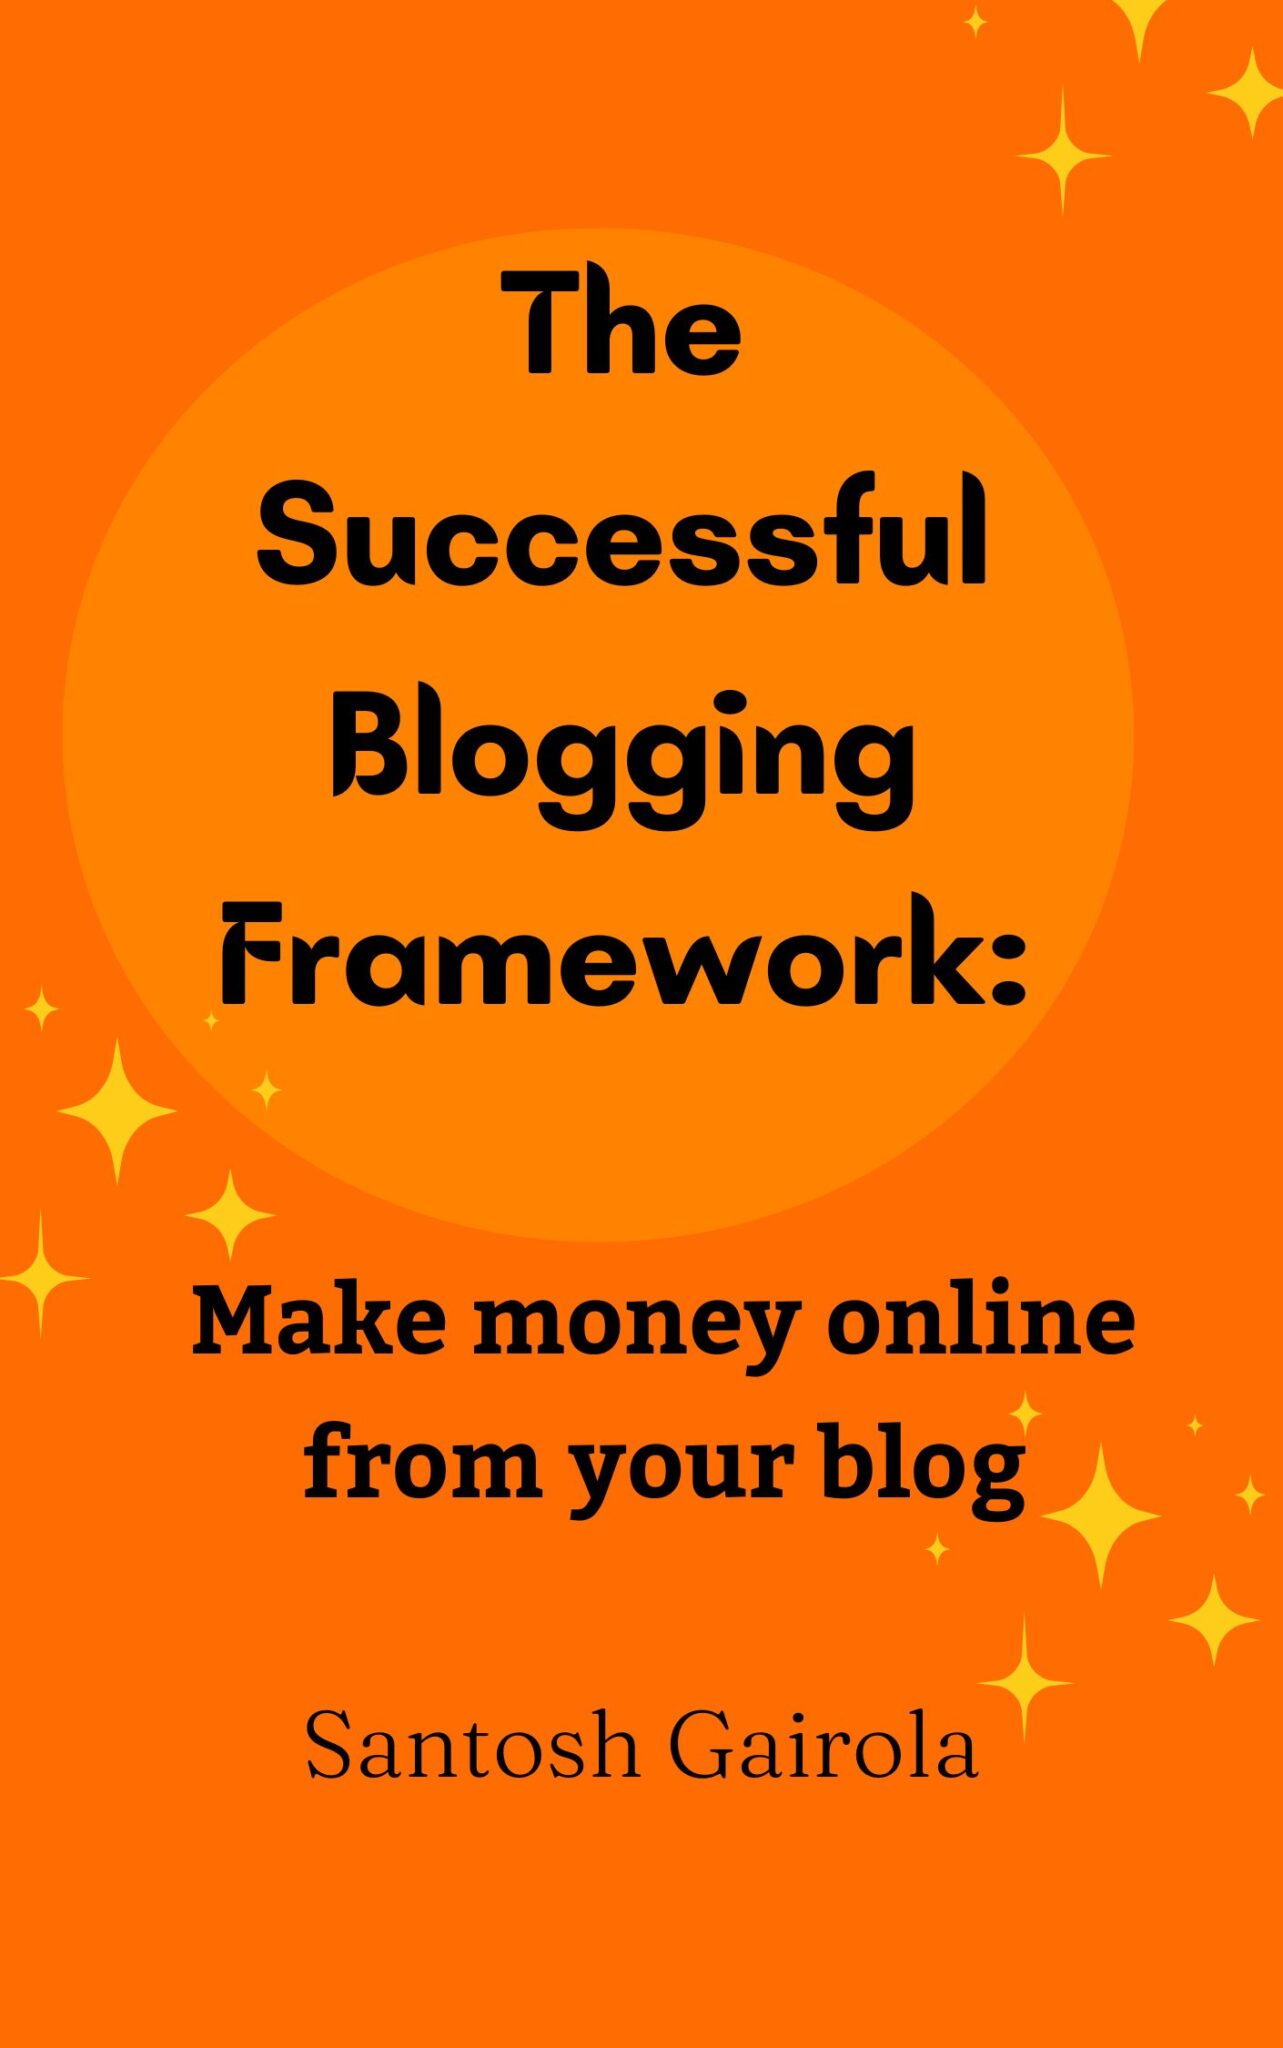 The Successful Blogging Framework: Make money online from your blog